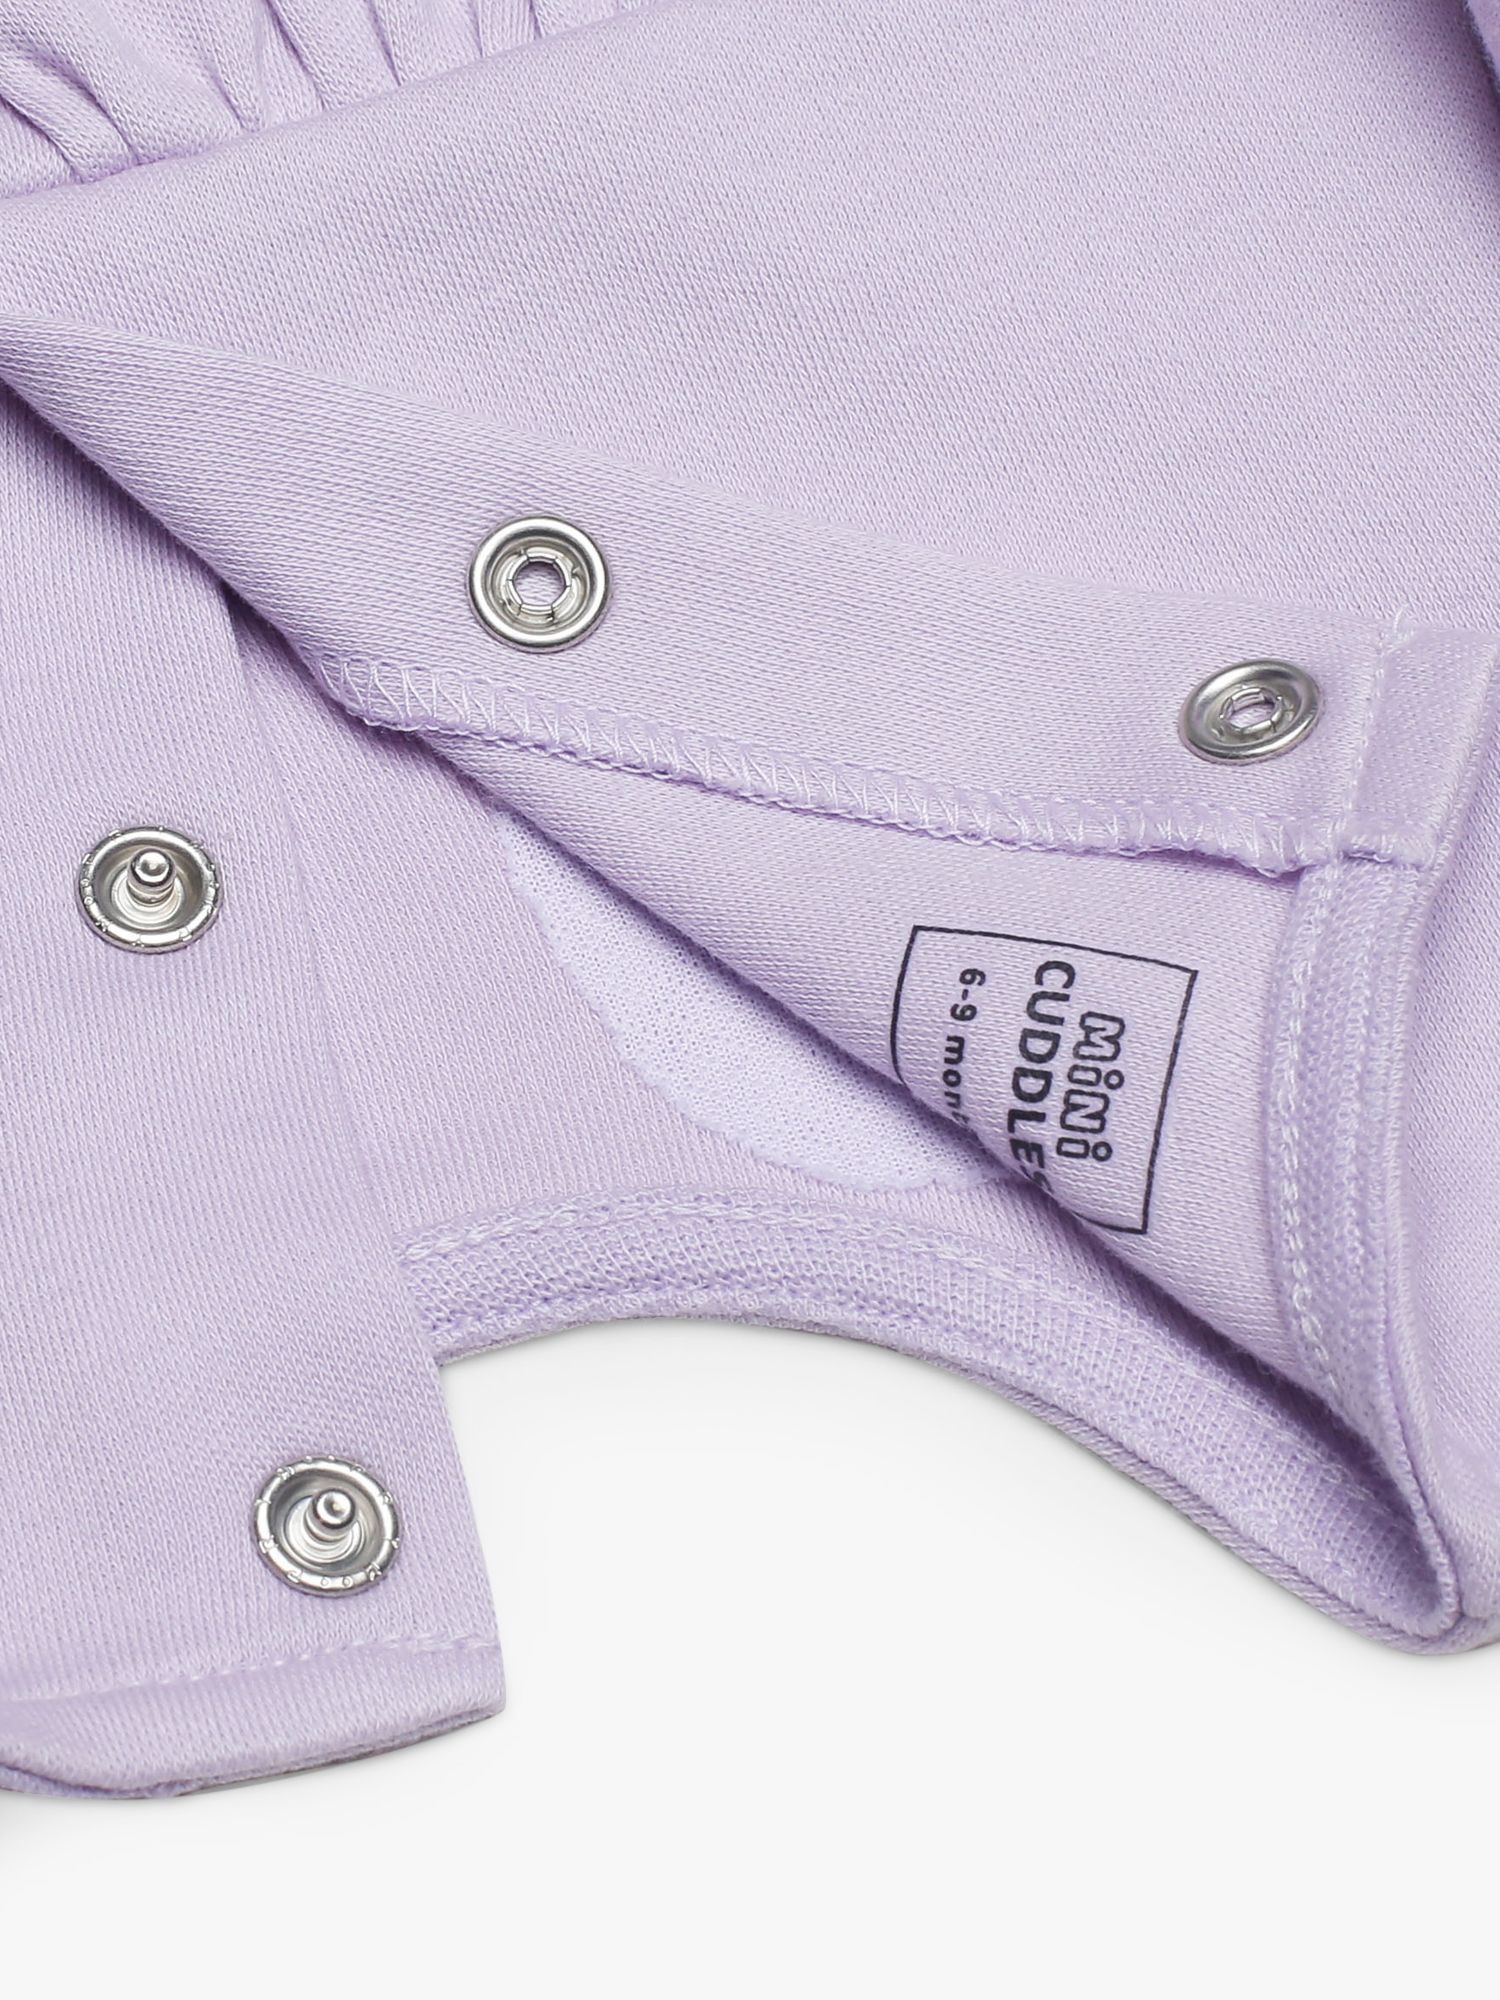 Mini Cuddles Baby Floral Embroidered Integral Bodysuit Dress, Purple Multi, 3-6 months